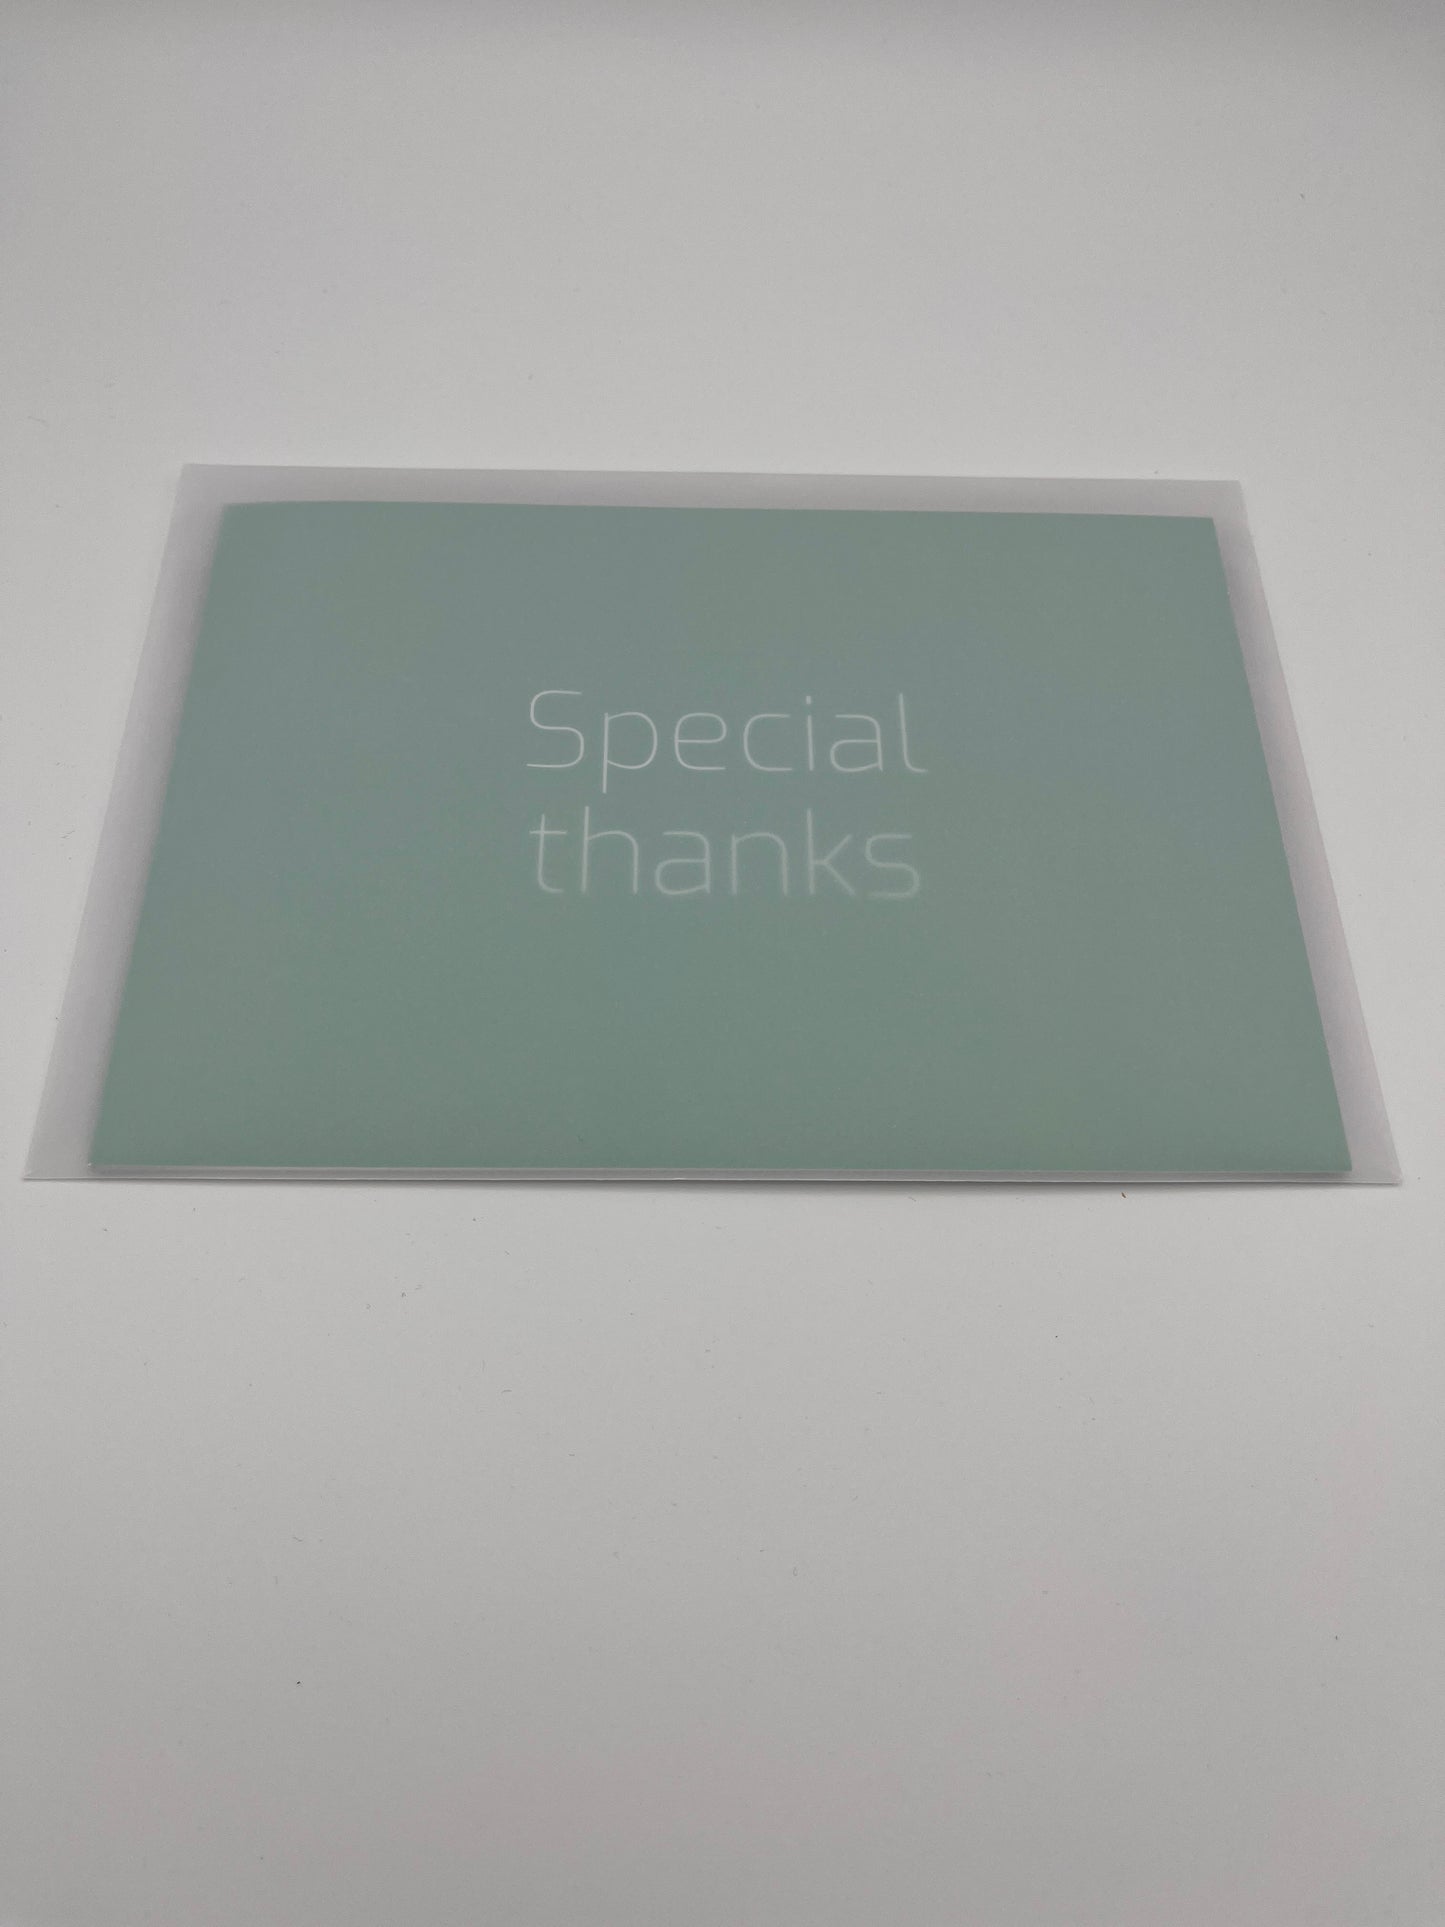 Dankeskarte "Special Thanks" mit CD